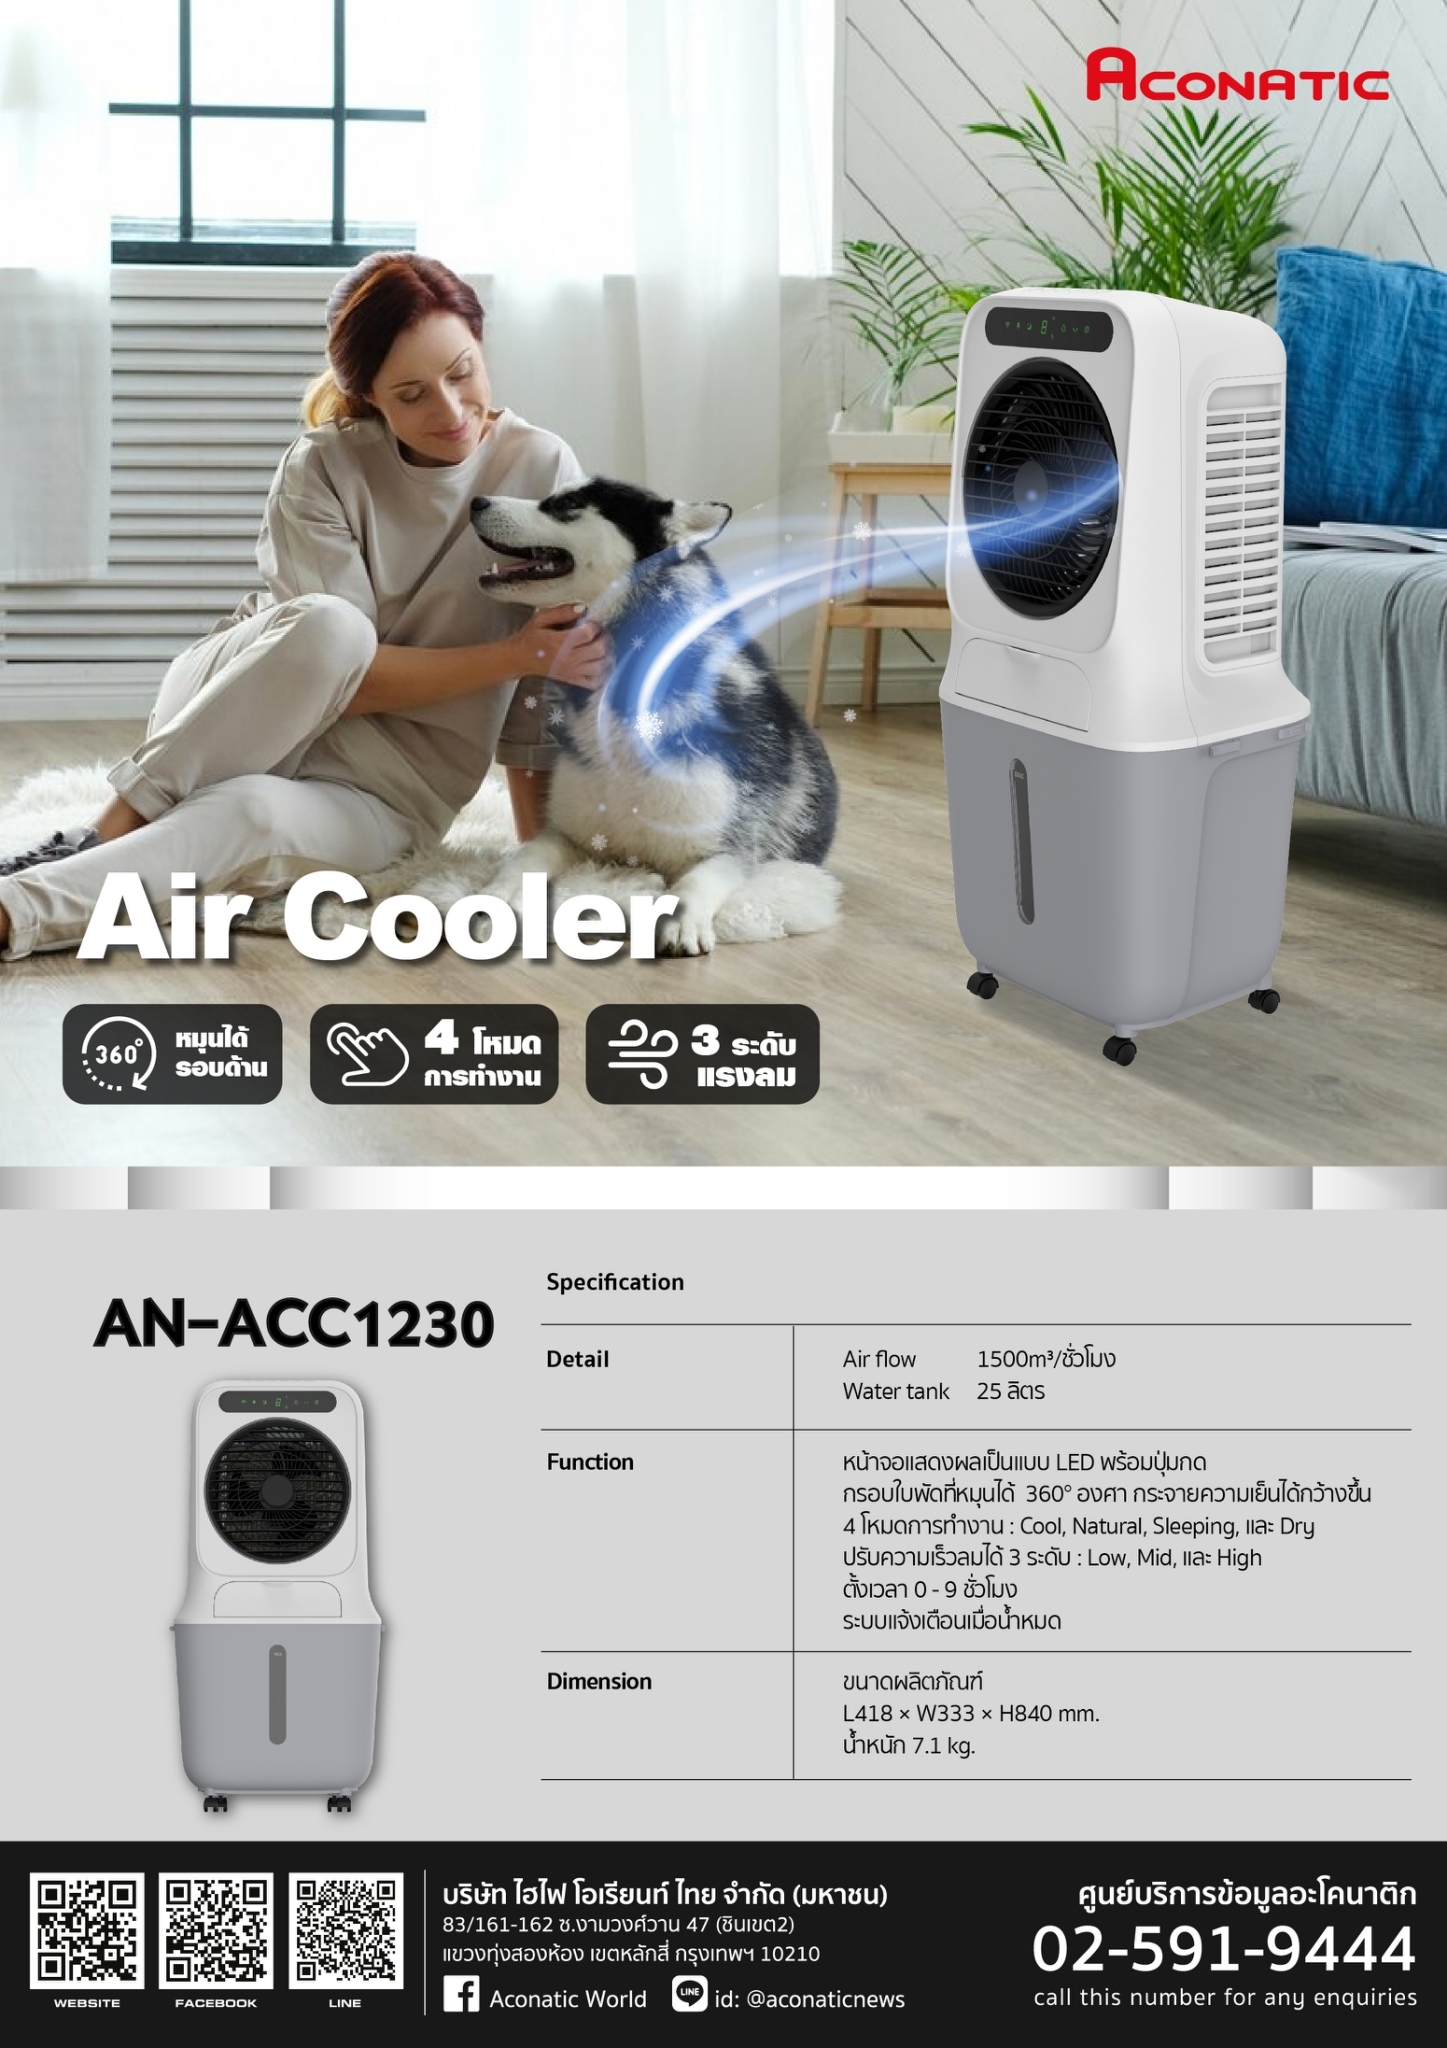 Air Cooler model AN-ACC1230